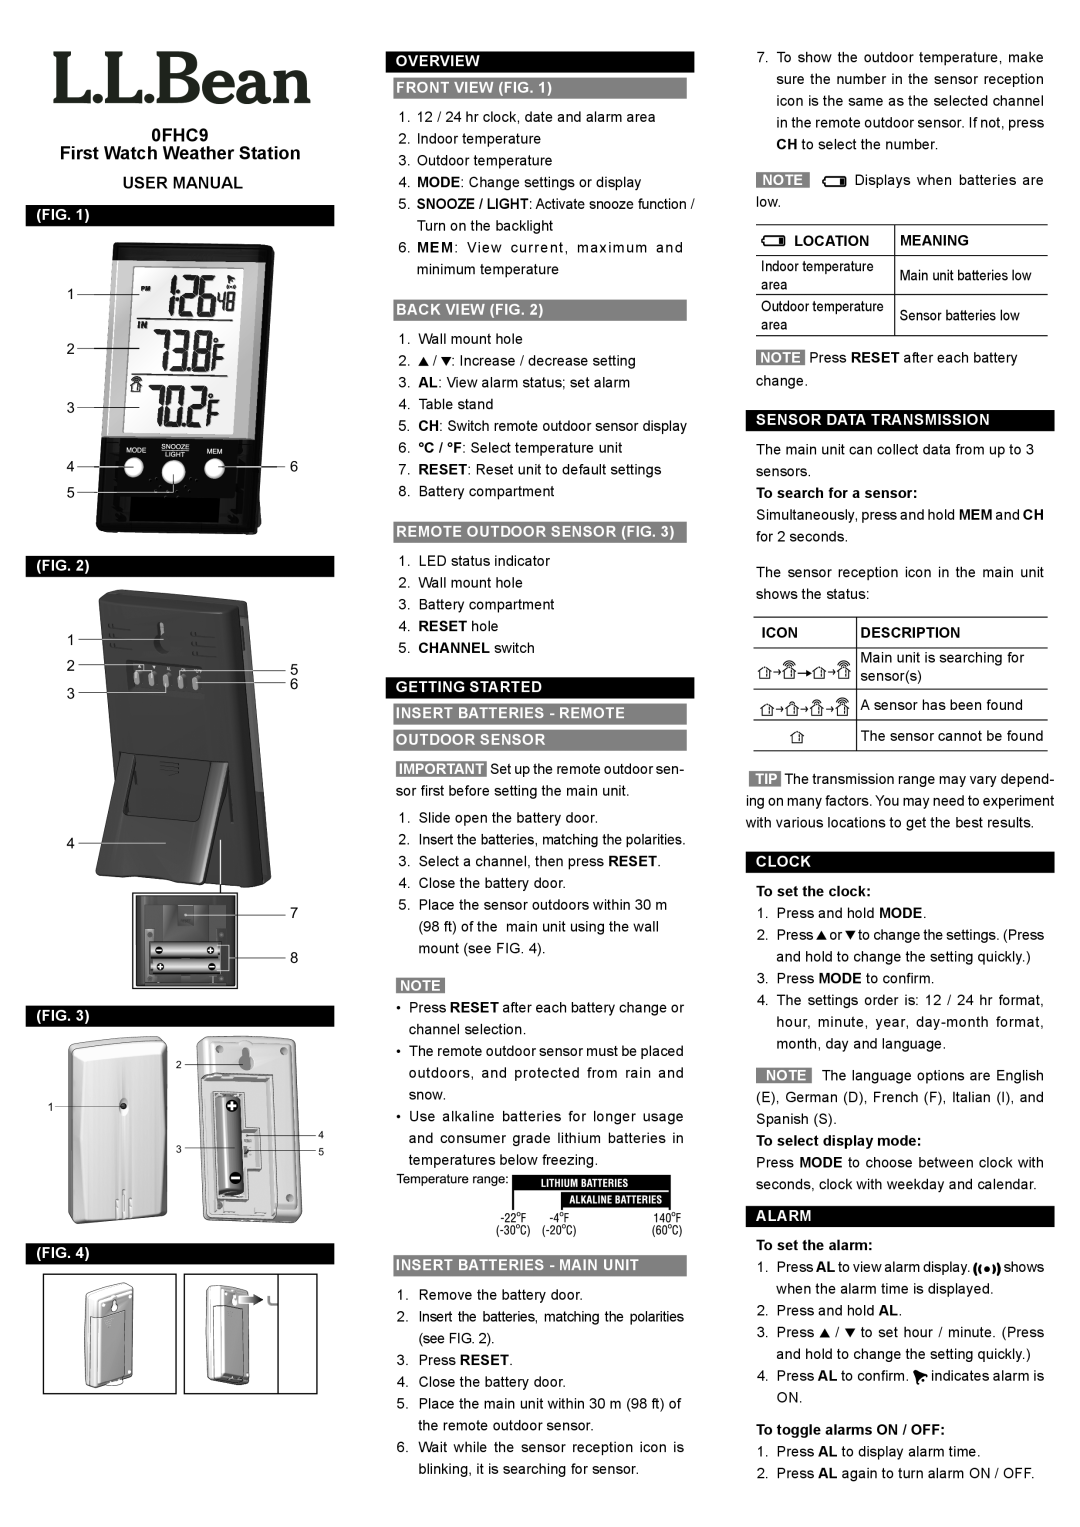 L.L. Bean 0FHC9 user manual Overview Front View Fig, Back View Fig, Remote Outdoor Sensor Fig, Sensor Data Transmission 